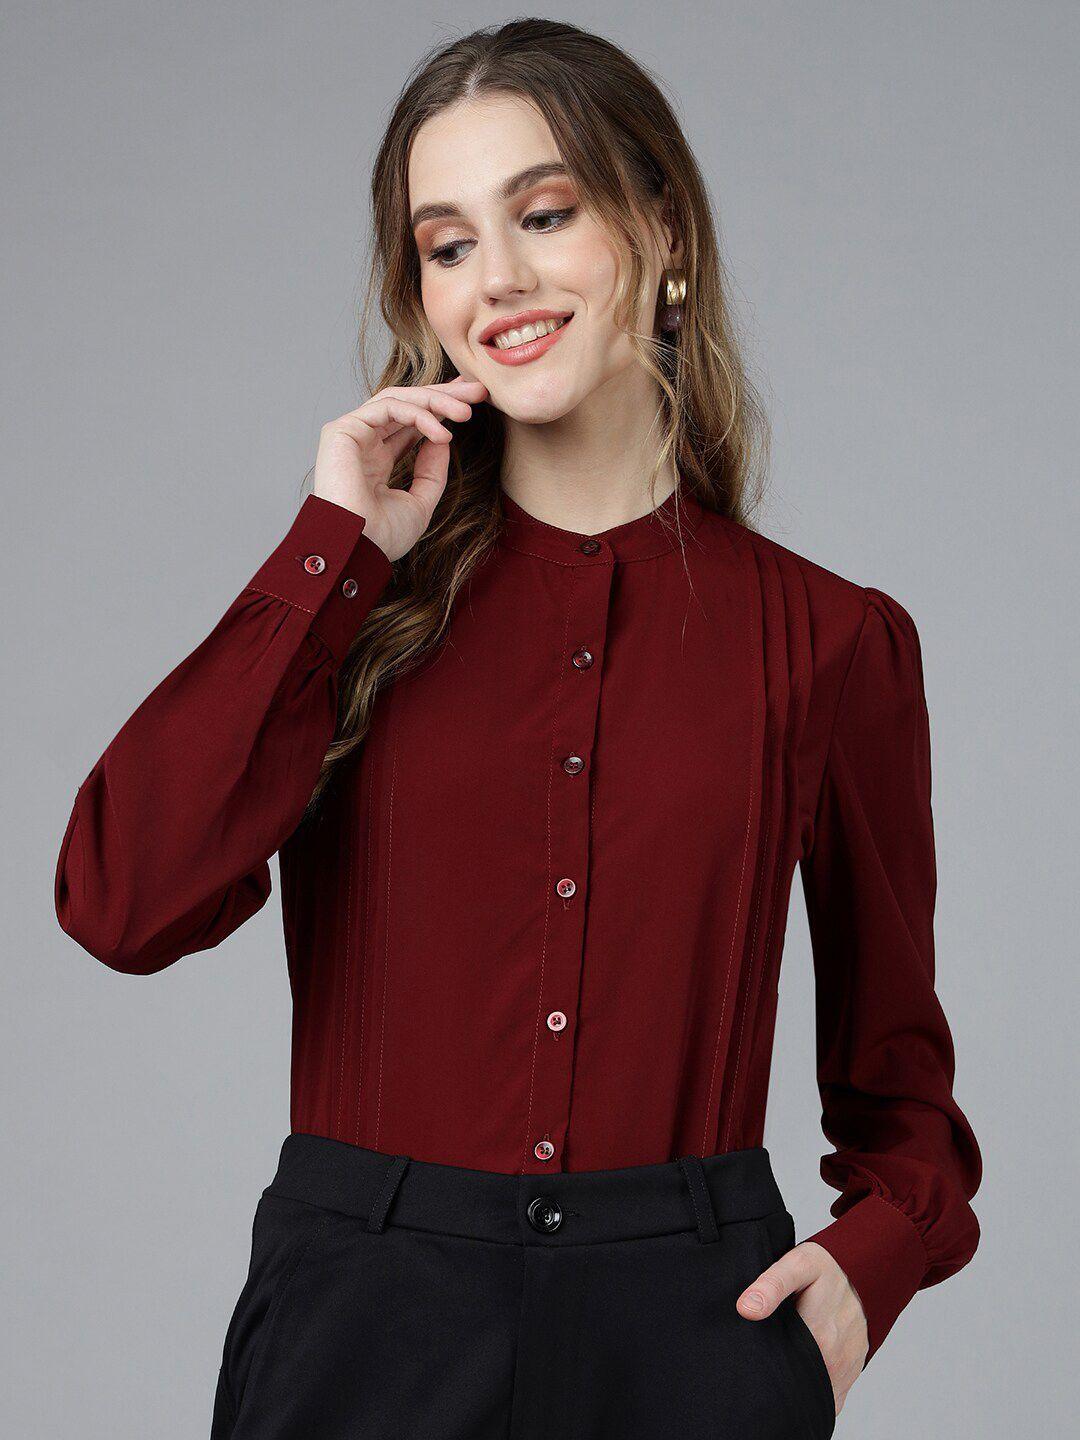 fithub mandarin collar cuffed sleeves pin tucks cotton shirt style top